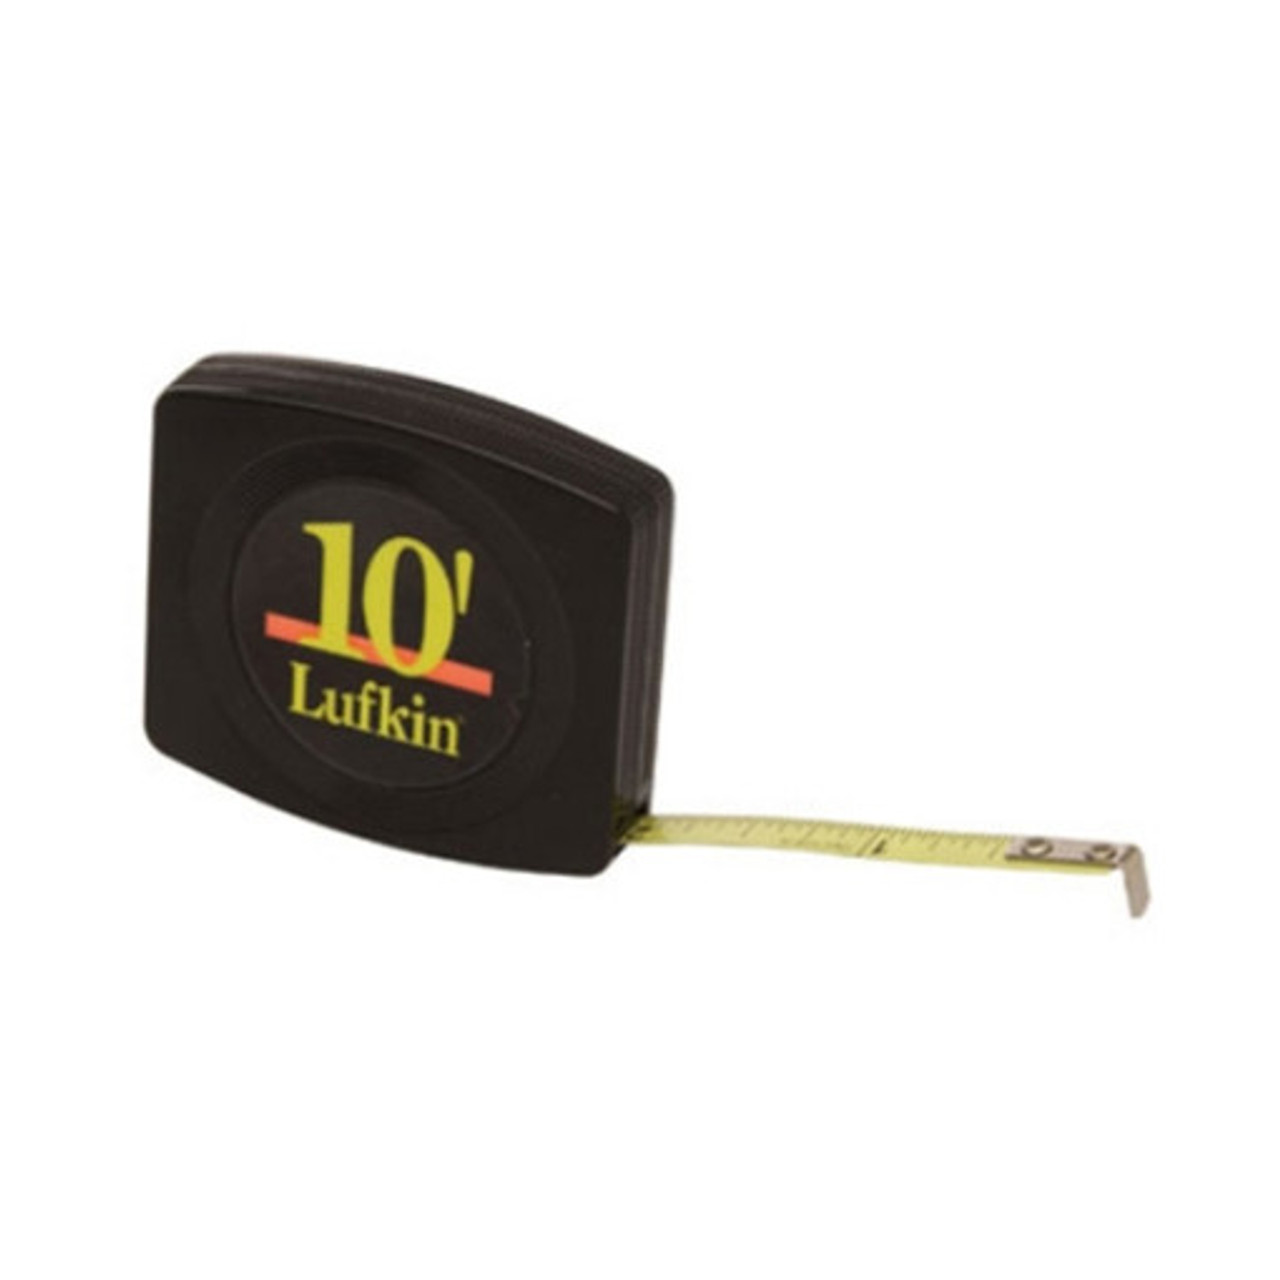 Lufkin W6110 Pee Wee Pocket Measuring Tape, 10ft